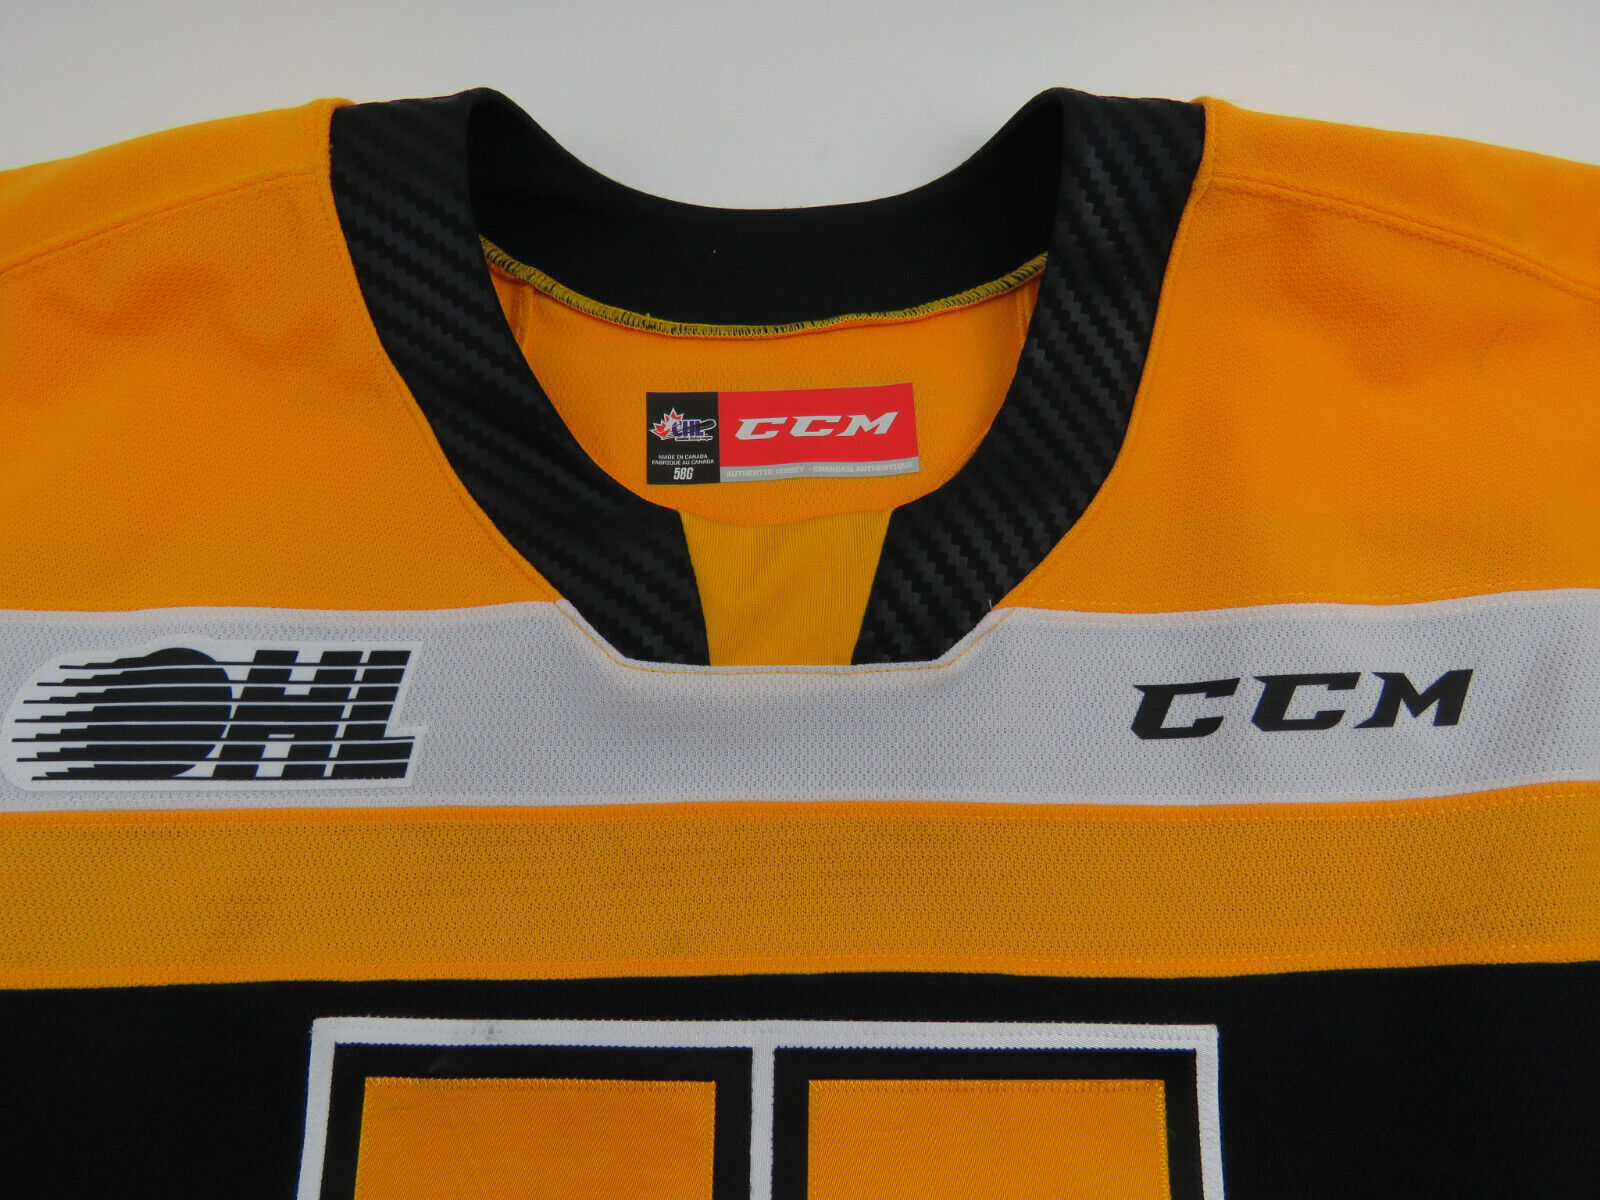 CCM Kingston Frontenacs OHL Pro Stock Game Worn Hockey Jersey 58 GOALIE Bonello